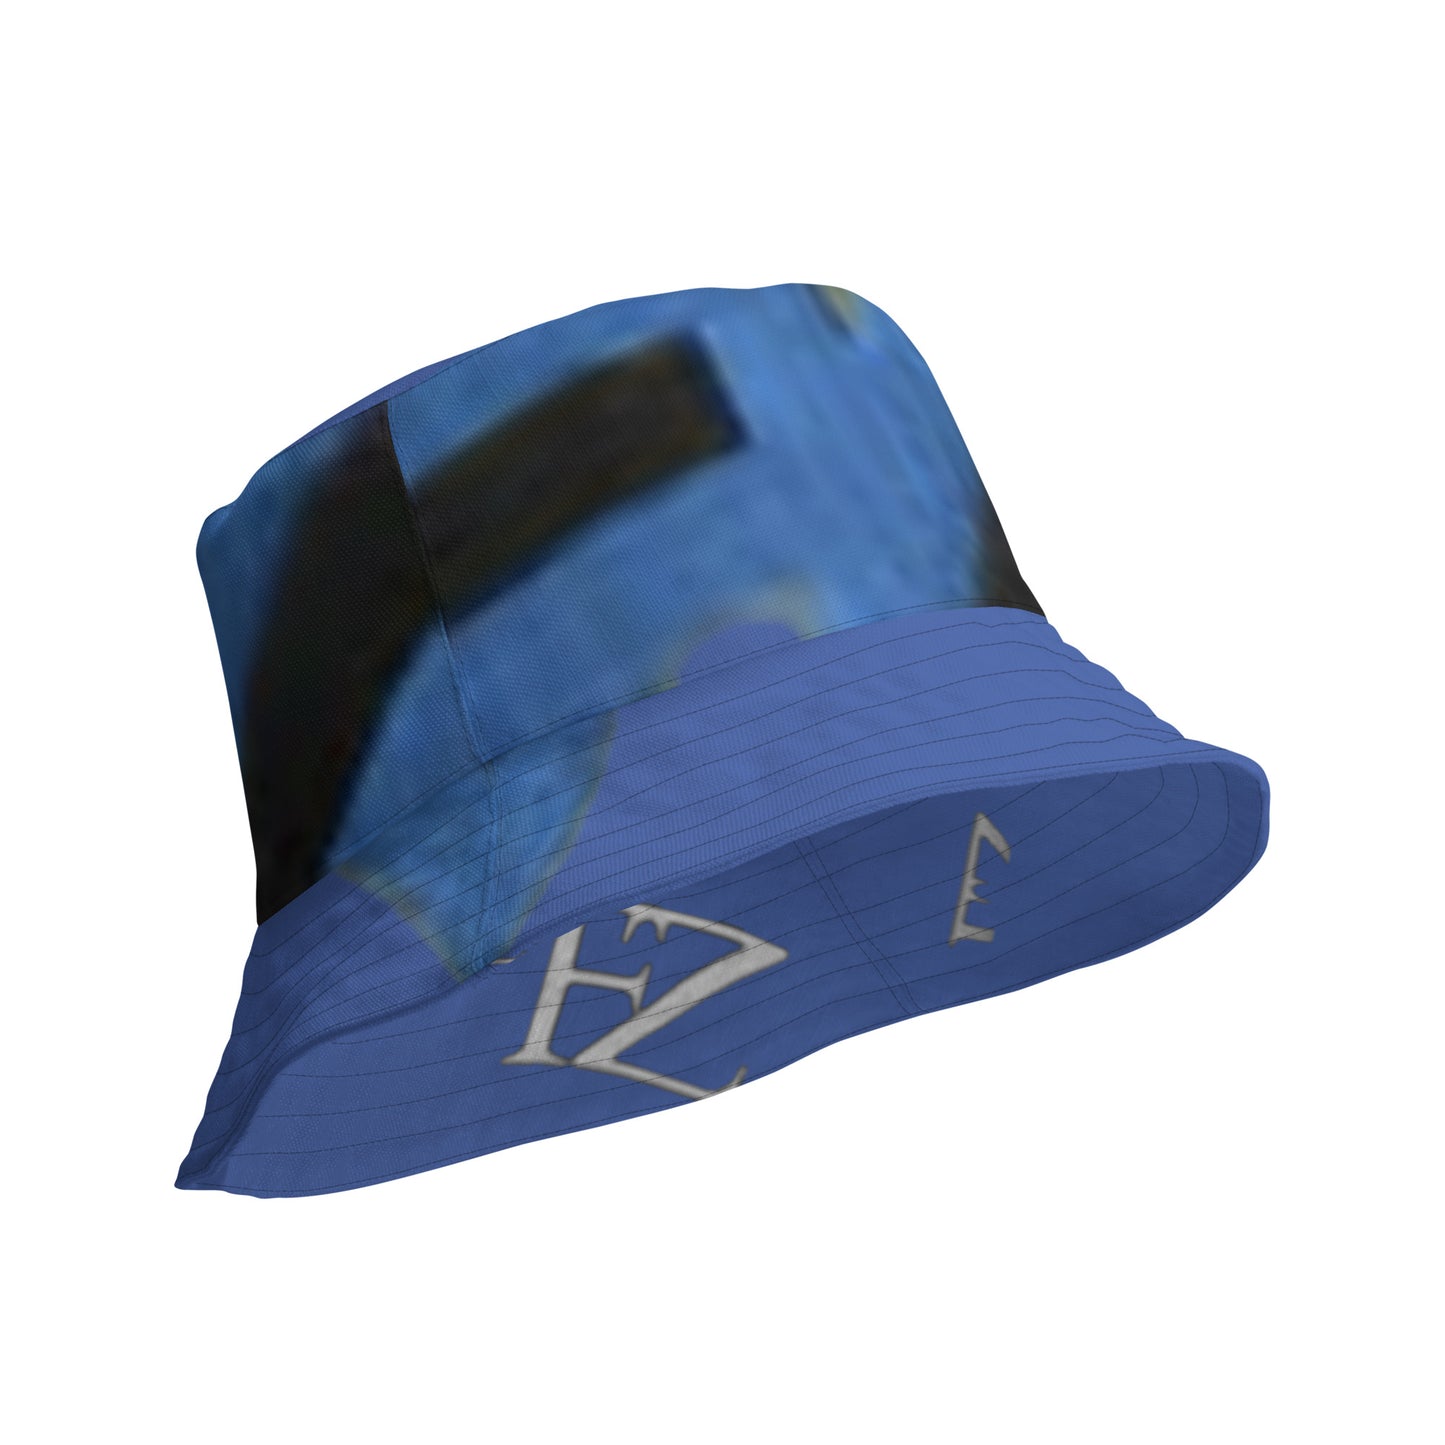 FZ Αναστρέψιμο καπέλο με κάδο